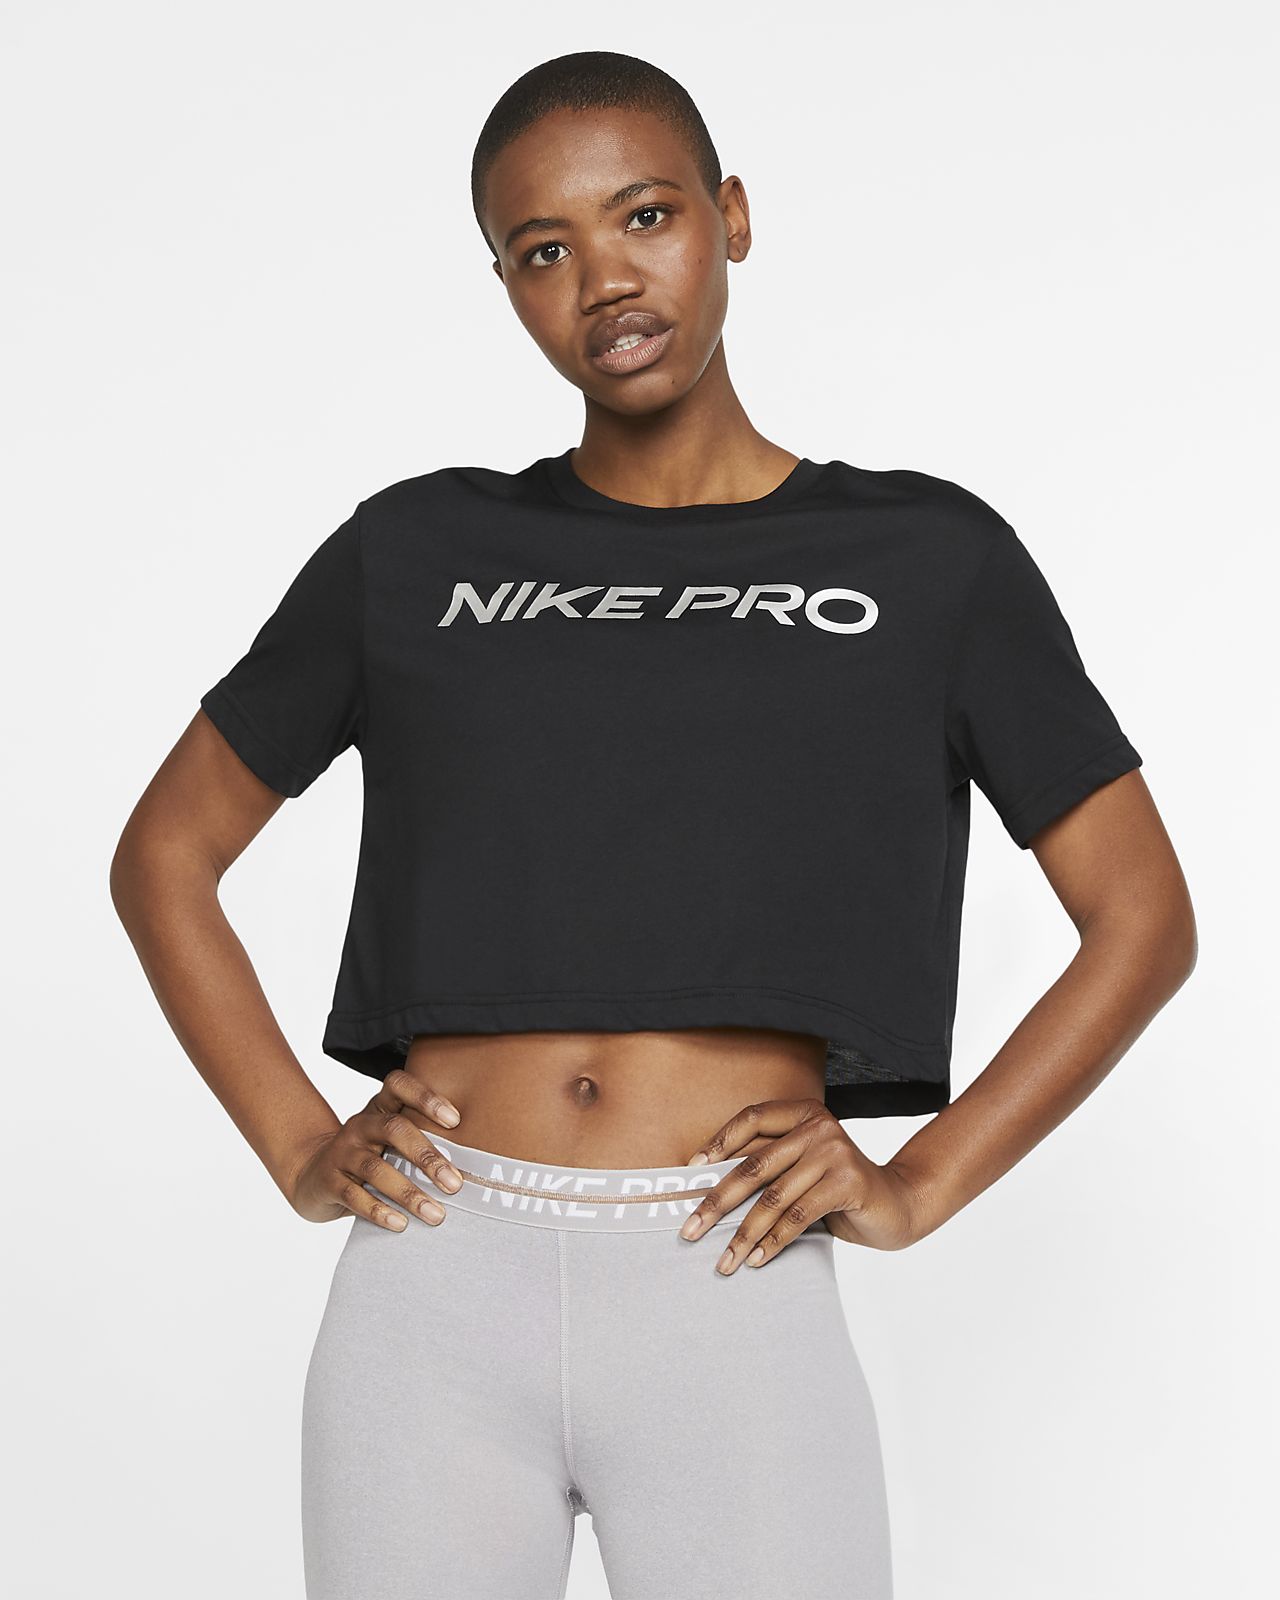 Nike Dri Fit Womens Training T Shirt - FitnessRetro